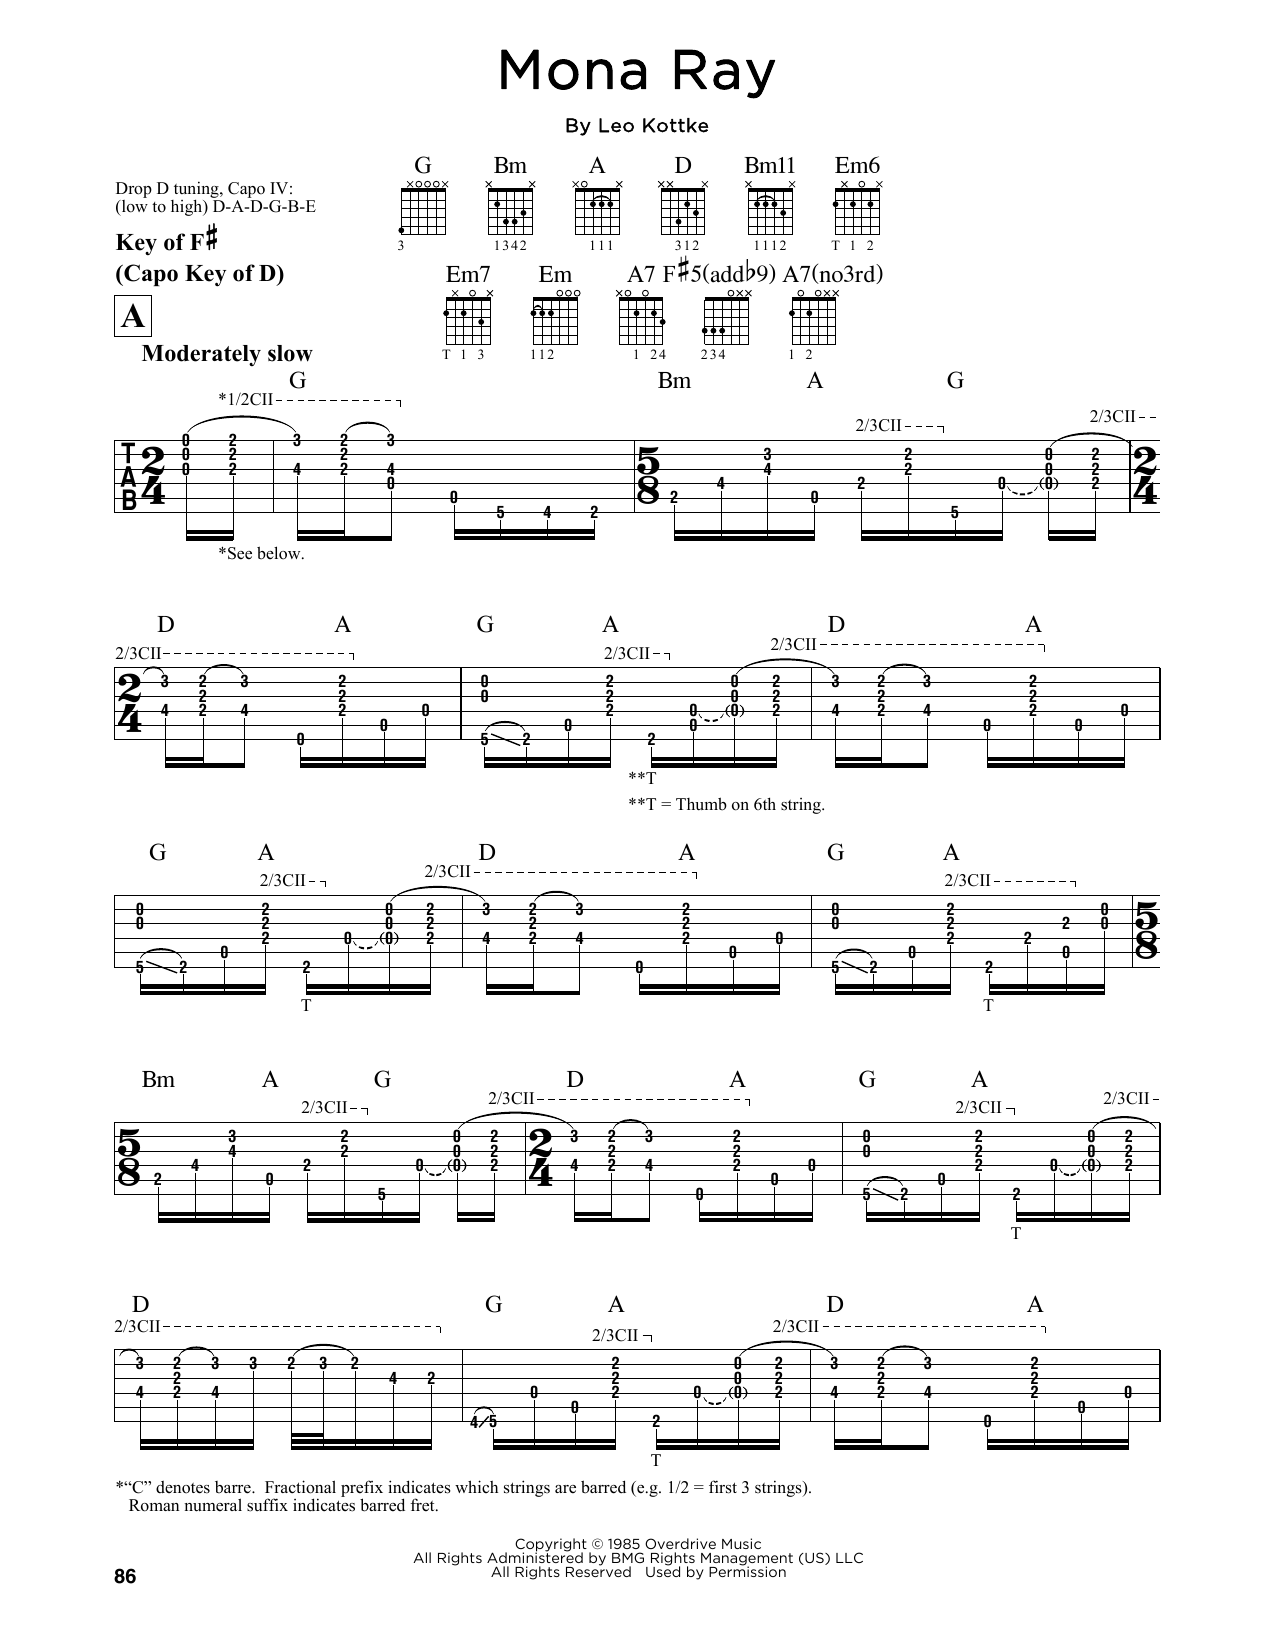 Leo Kottke Mona Ray Sheet Music Notes & Chords for Guitar Lead Sheet - Download or Print PDF